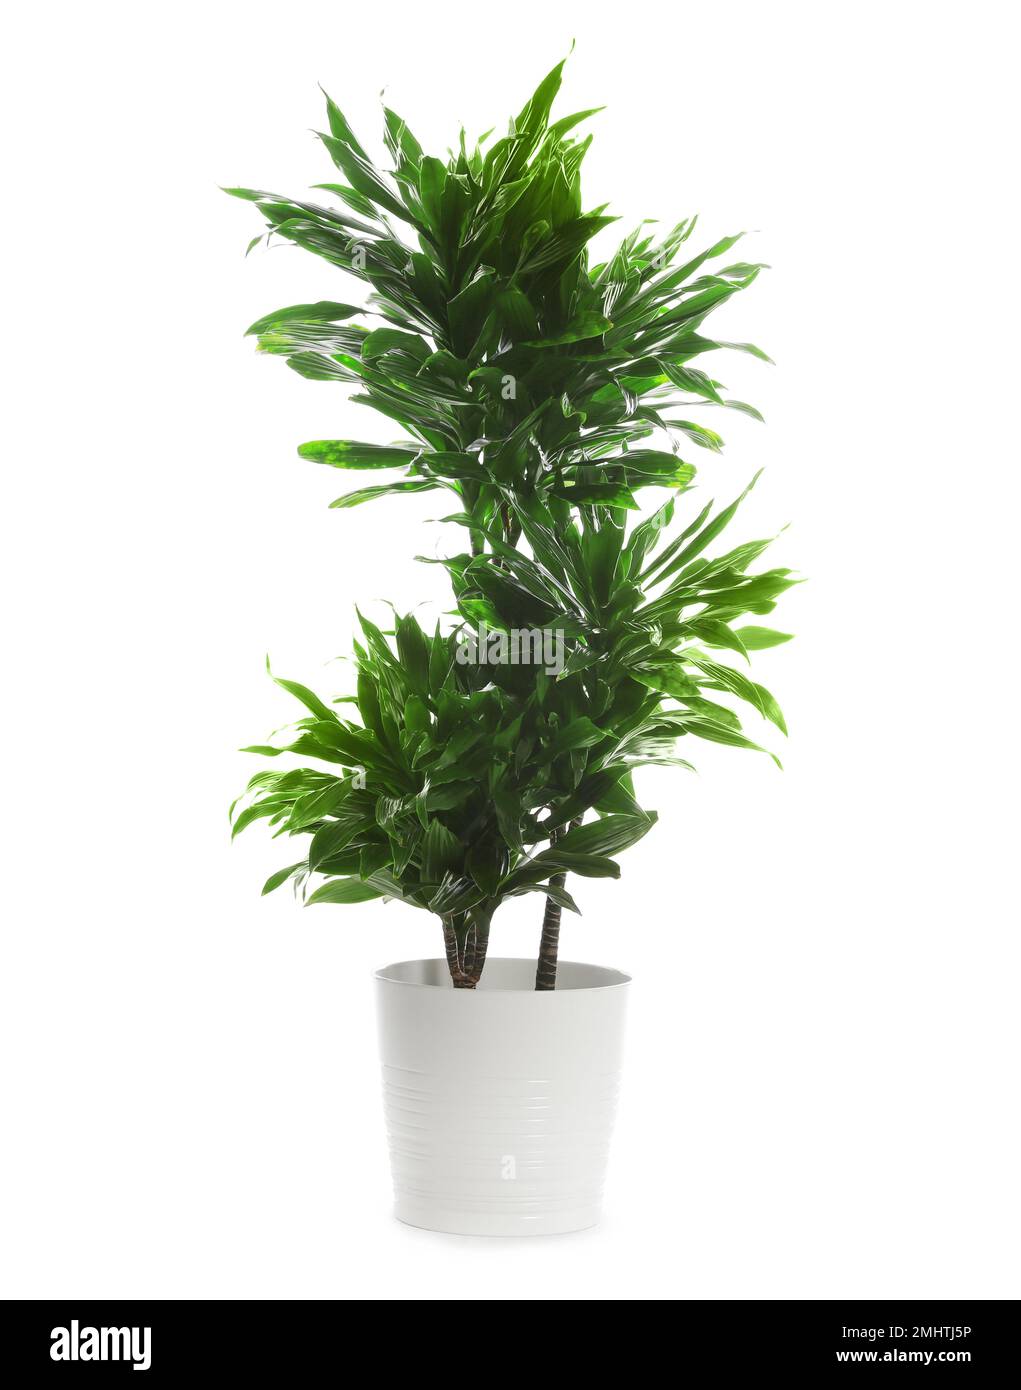 Pot with Dracaena plant isolated on white. Home decor Stock Photo